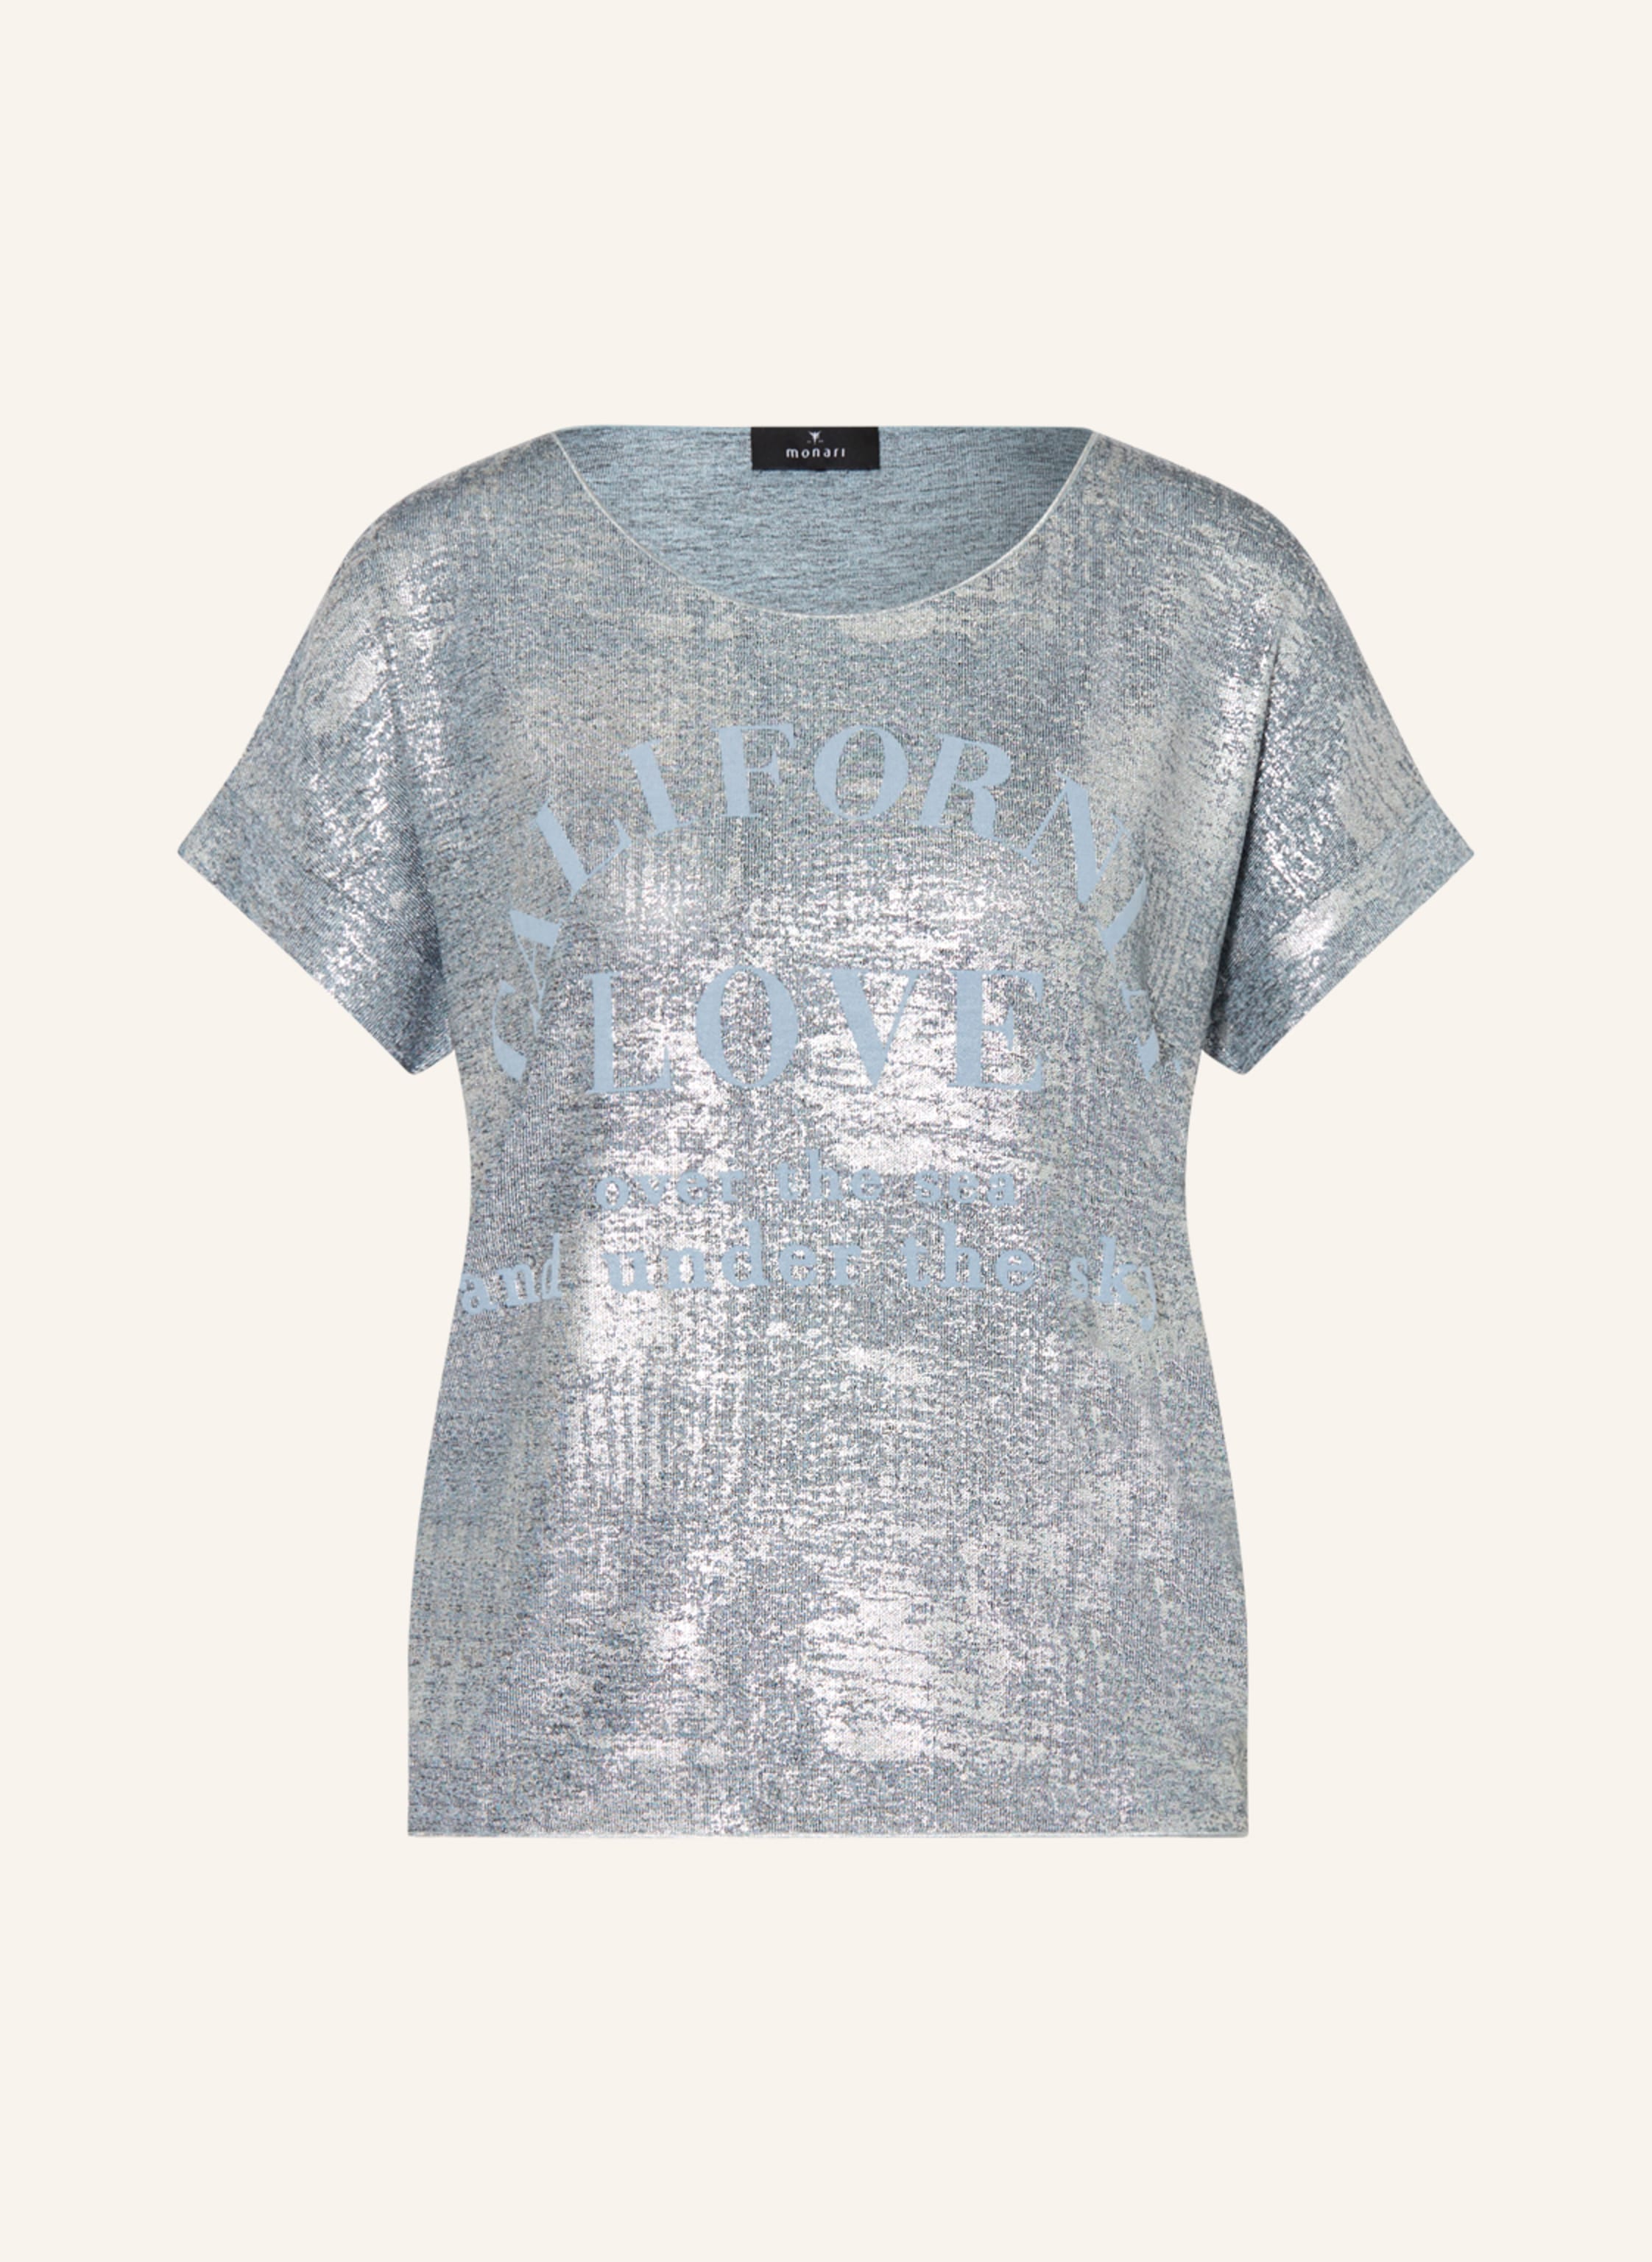 monari T-Shirt mit Glitzergarn in blaugrau/ silber